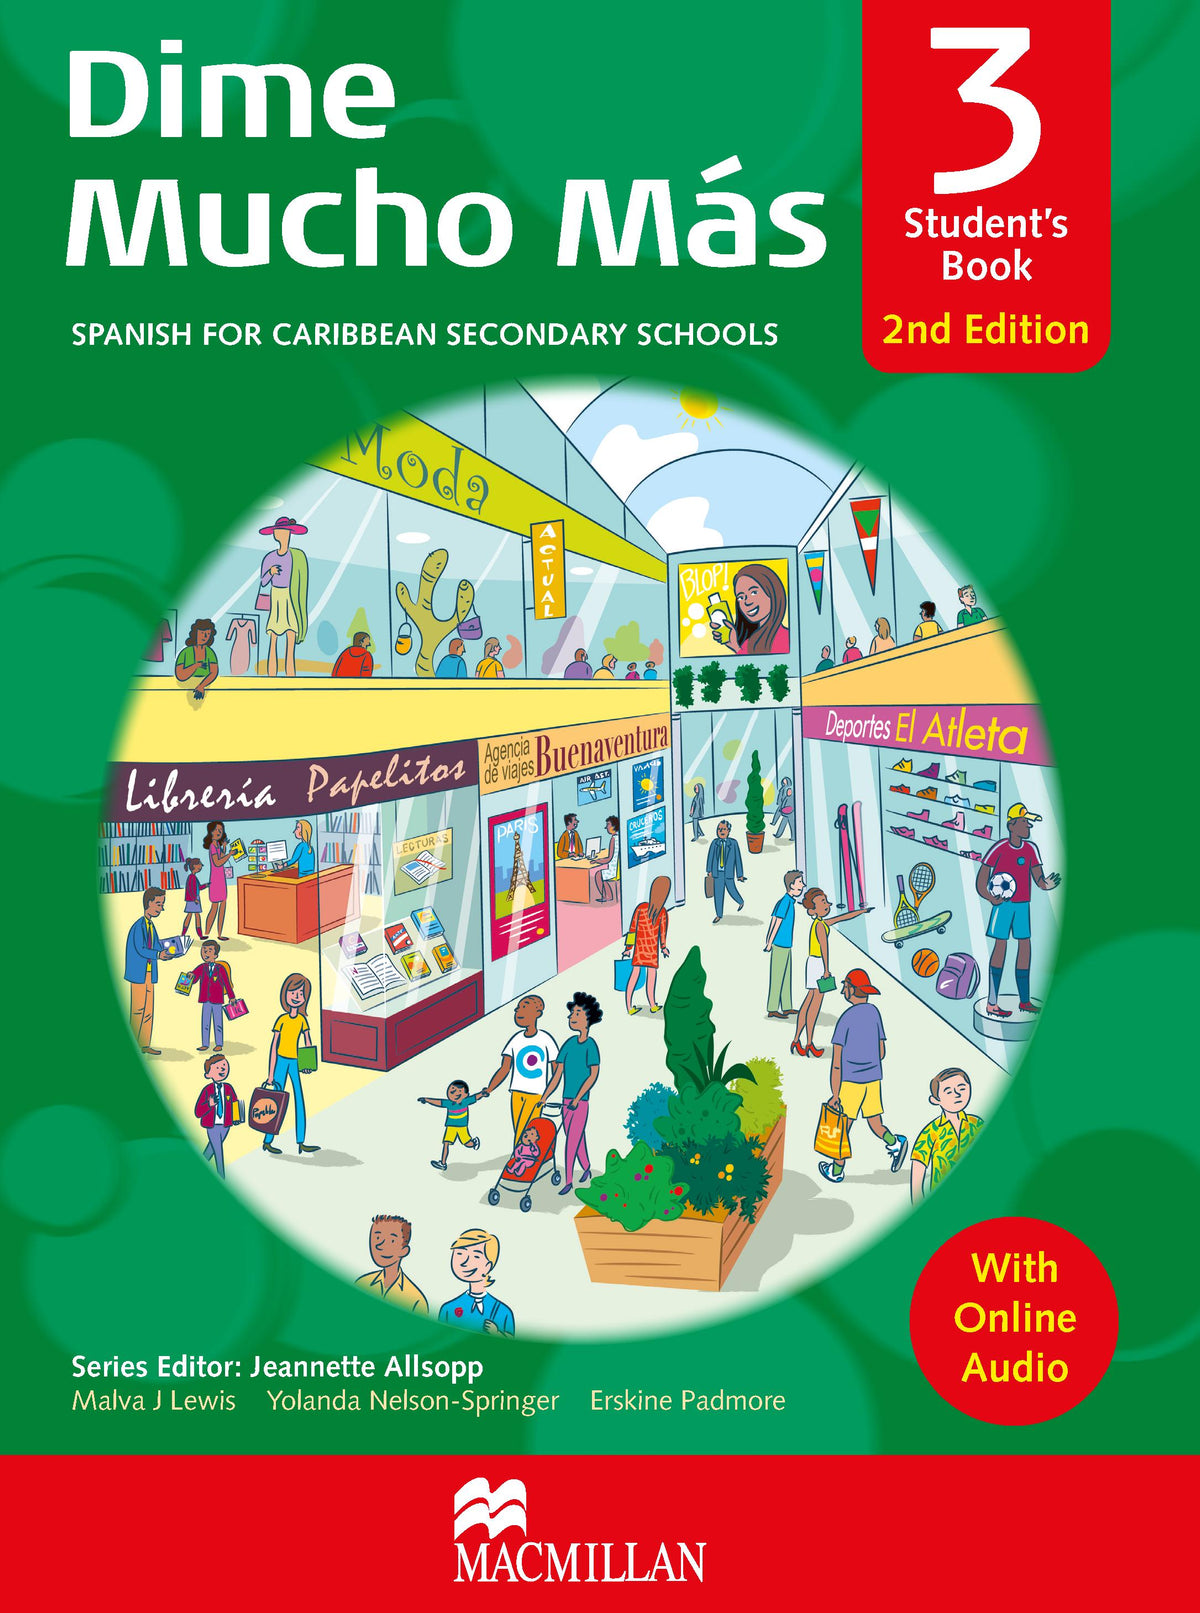 Student's　Edition　Mas　Dime　Book　—　Caribbean　Mucho　Education　2nd　Macmillan